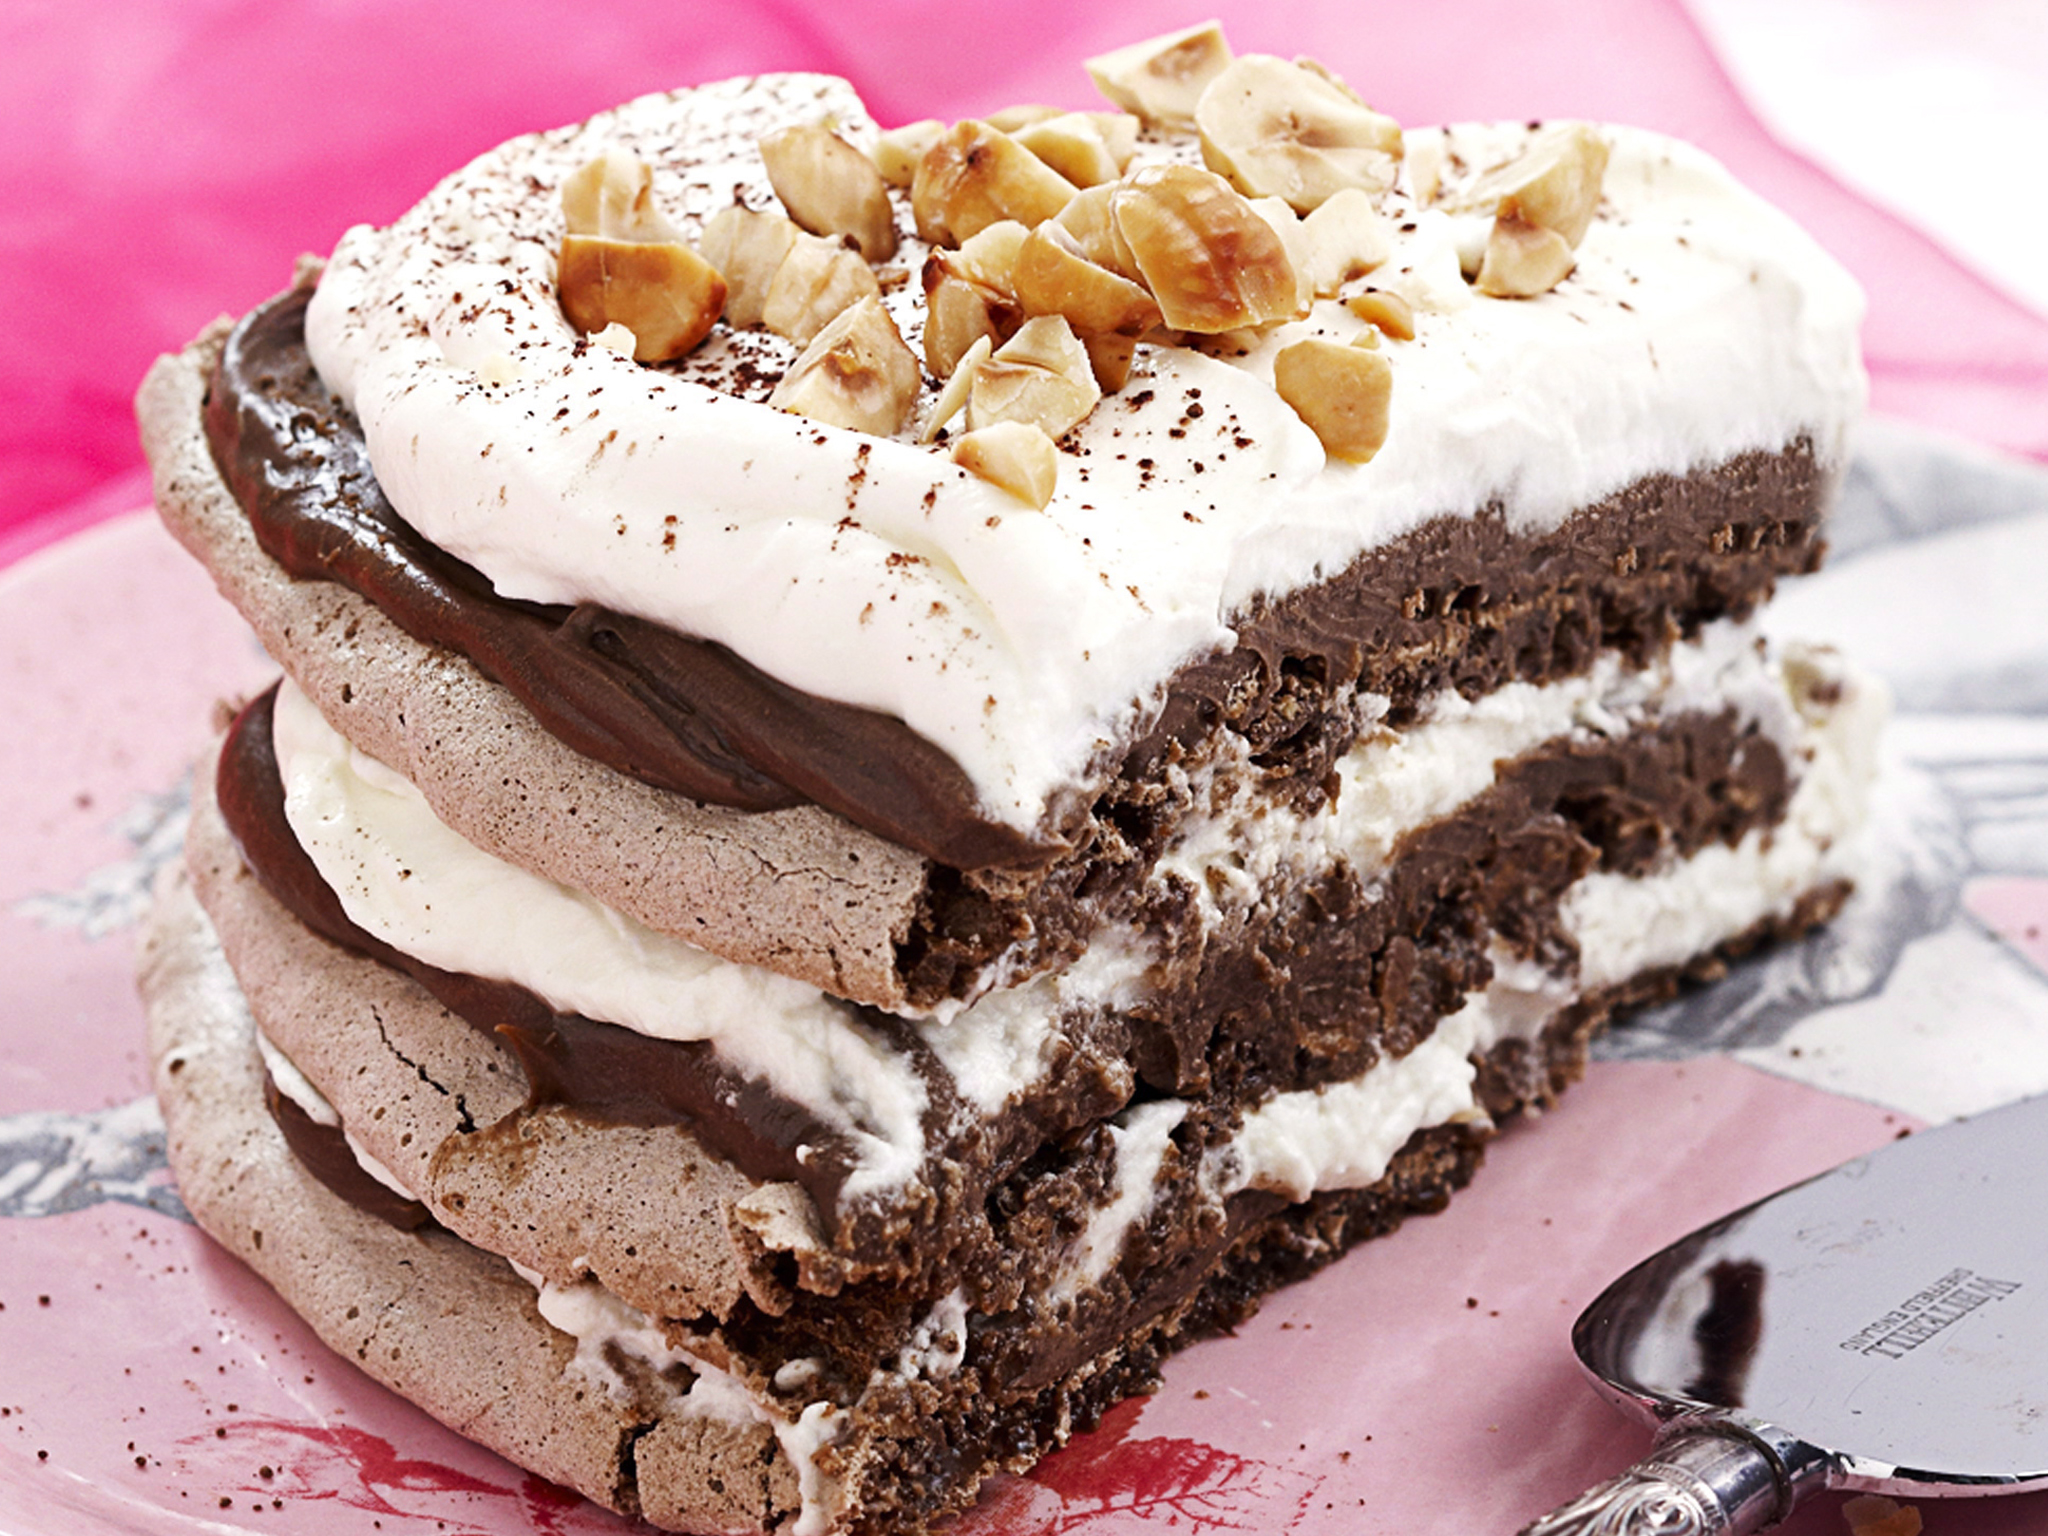 Chocolate and hazelnut meringue torte